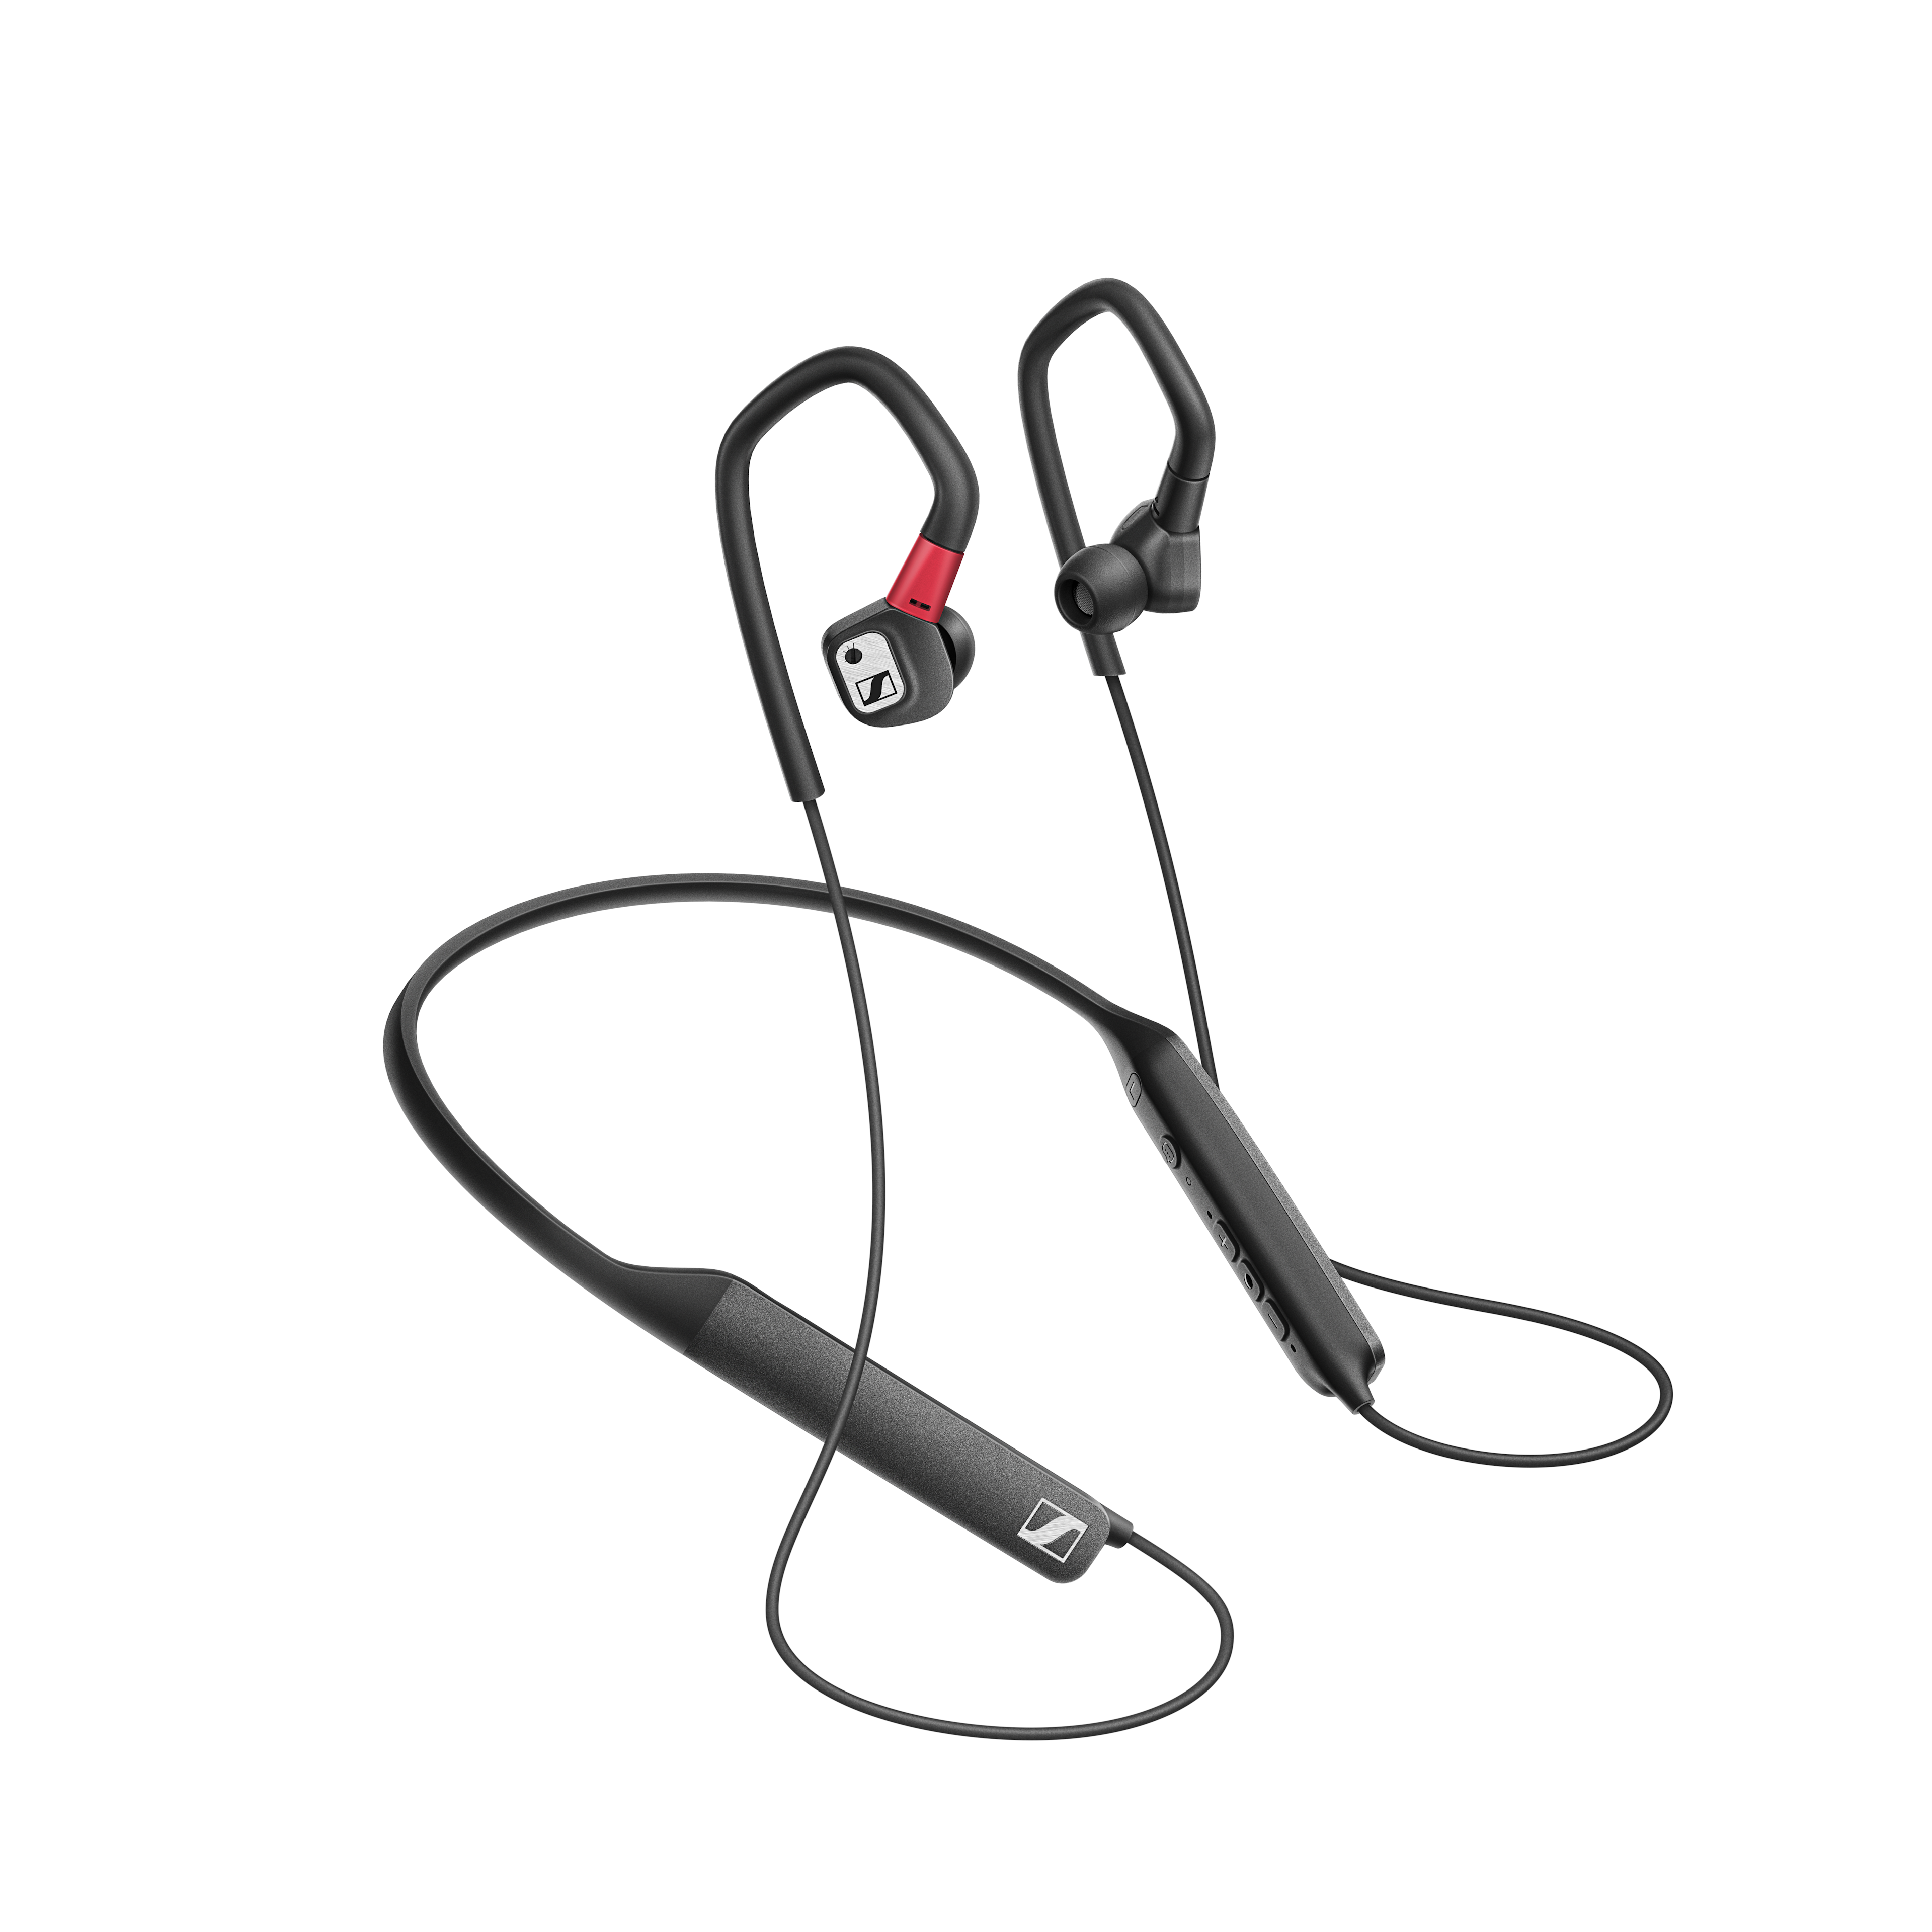 IE 80 S BT Bluetooth In-Ear headphones